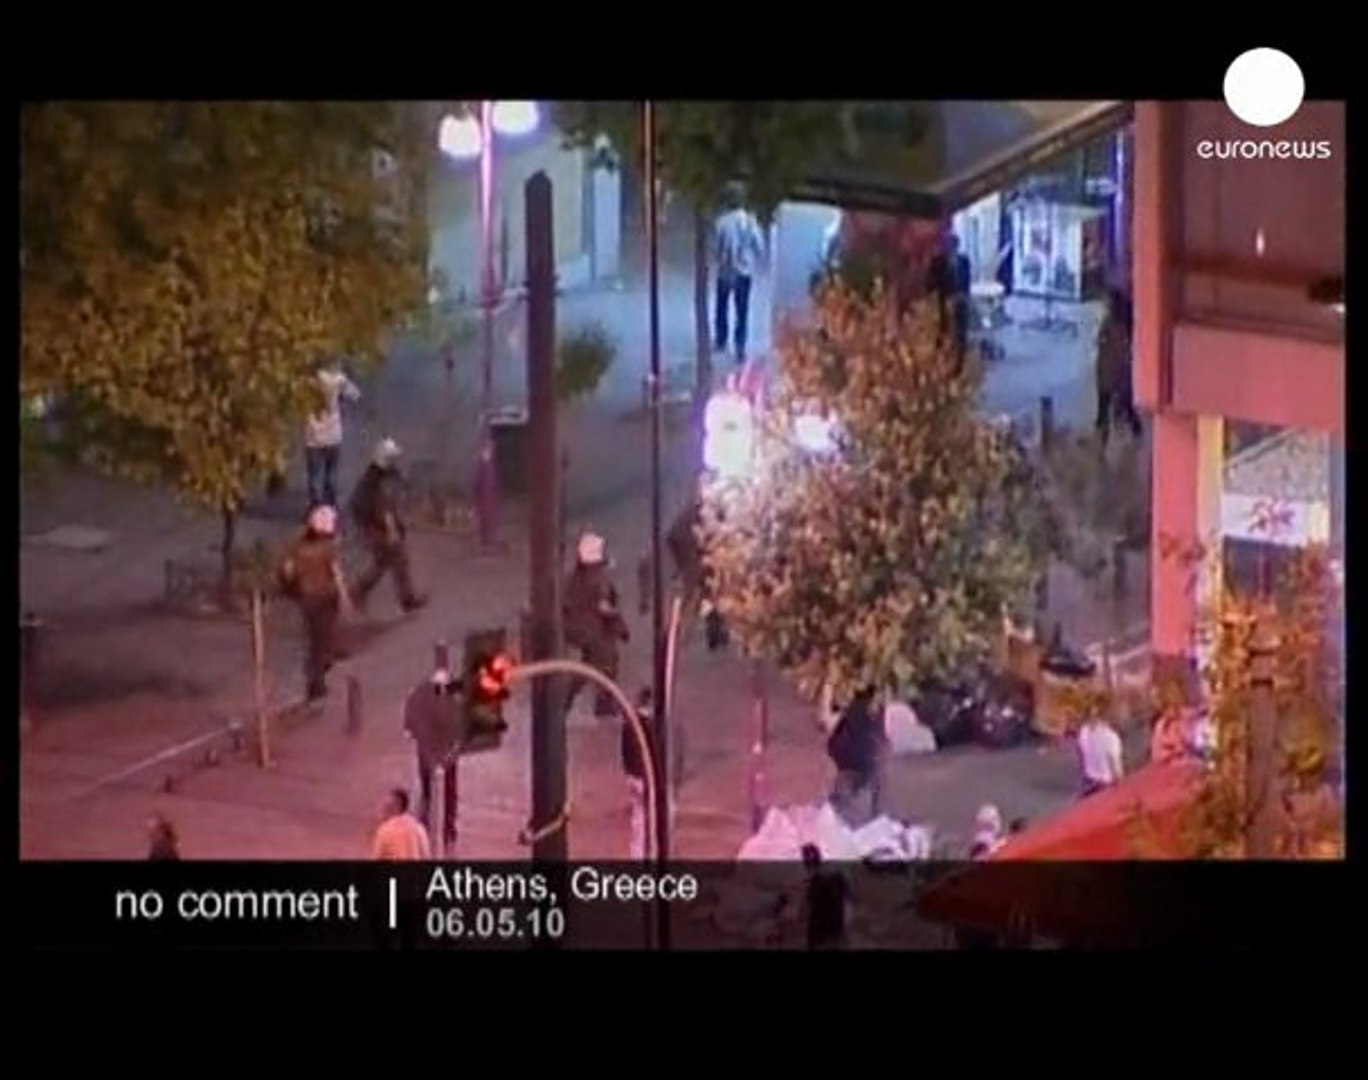 Greece's riots